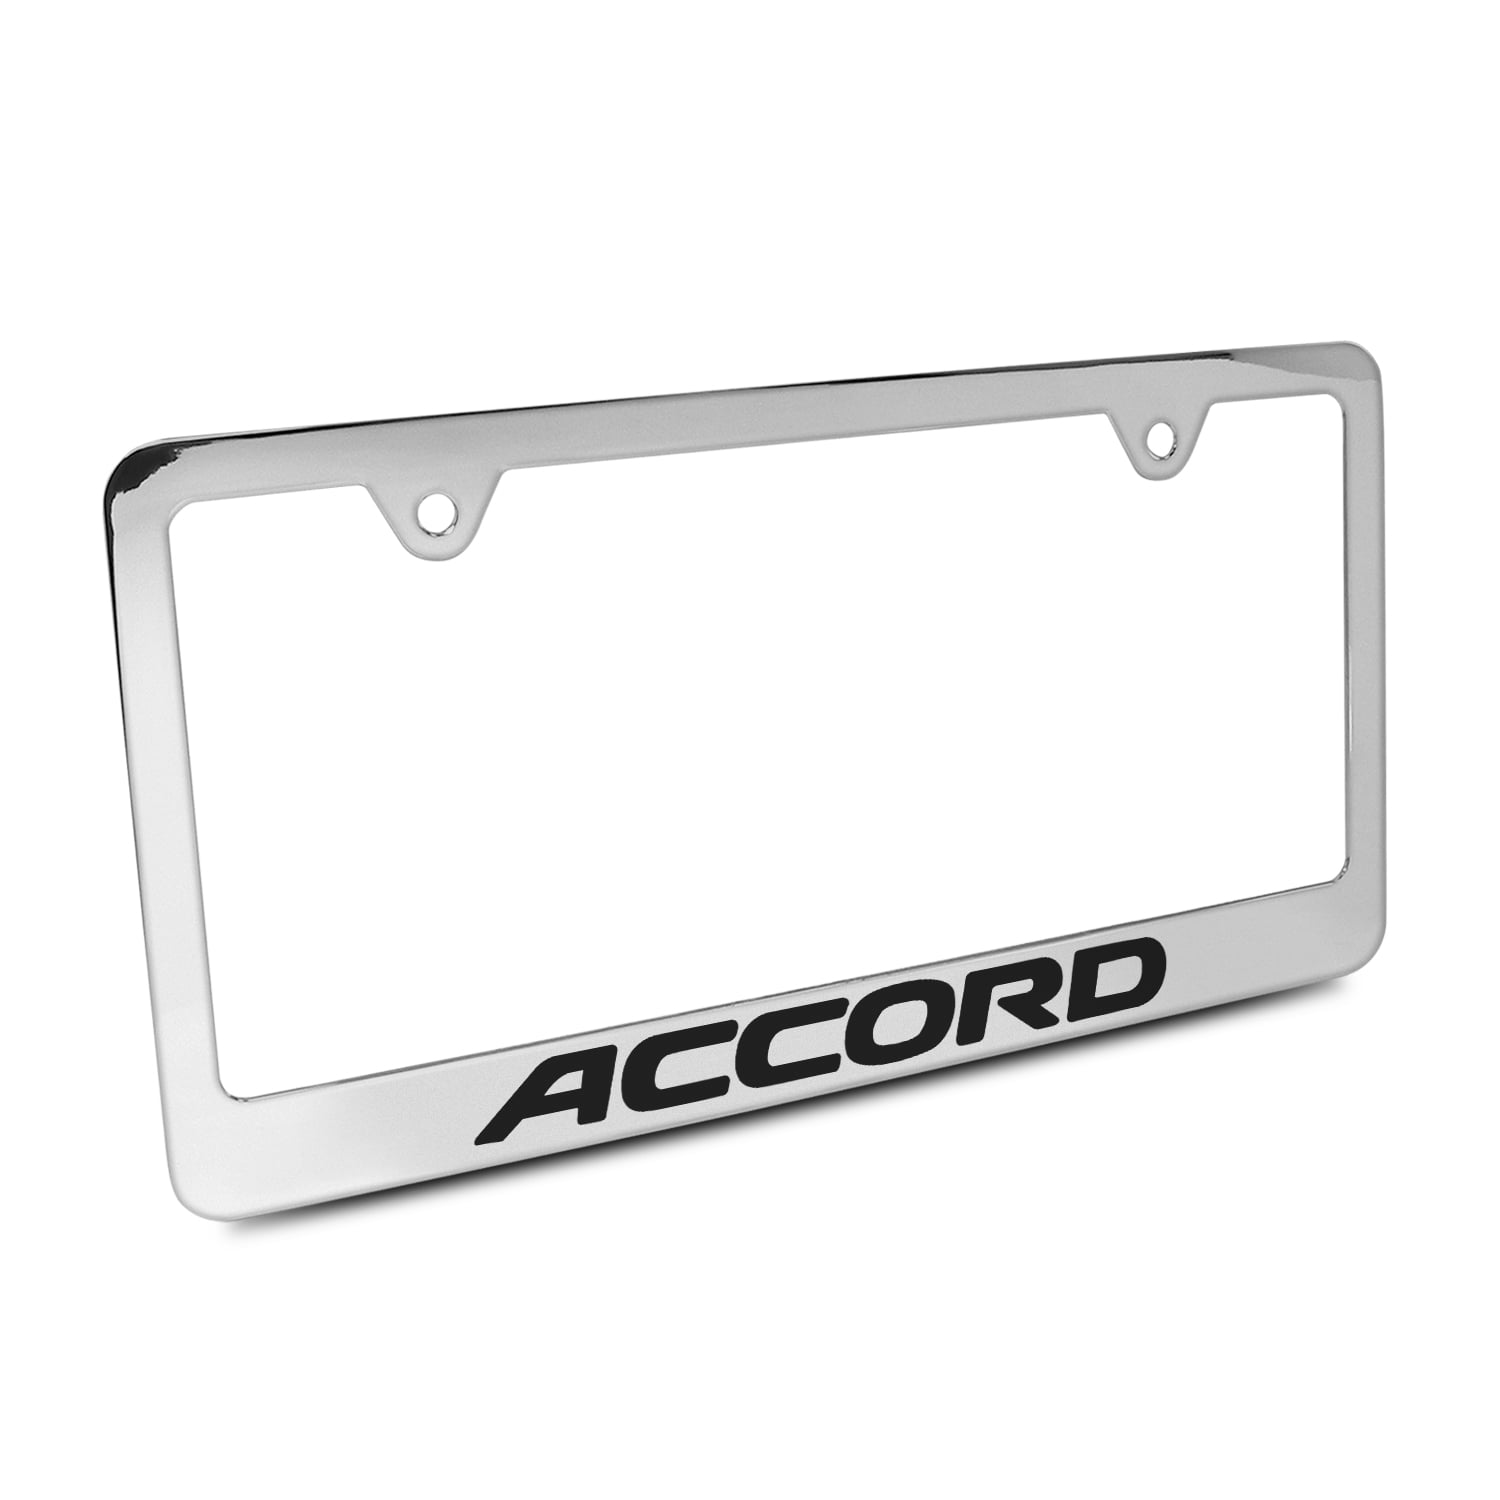 Honda Accord Chrome Plated Metal Decorative Vanity License Plate 